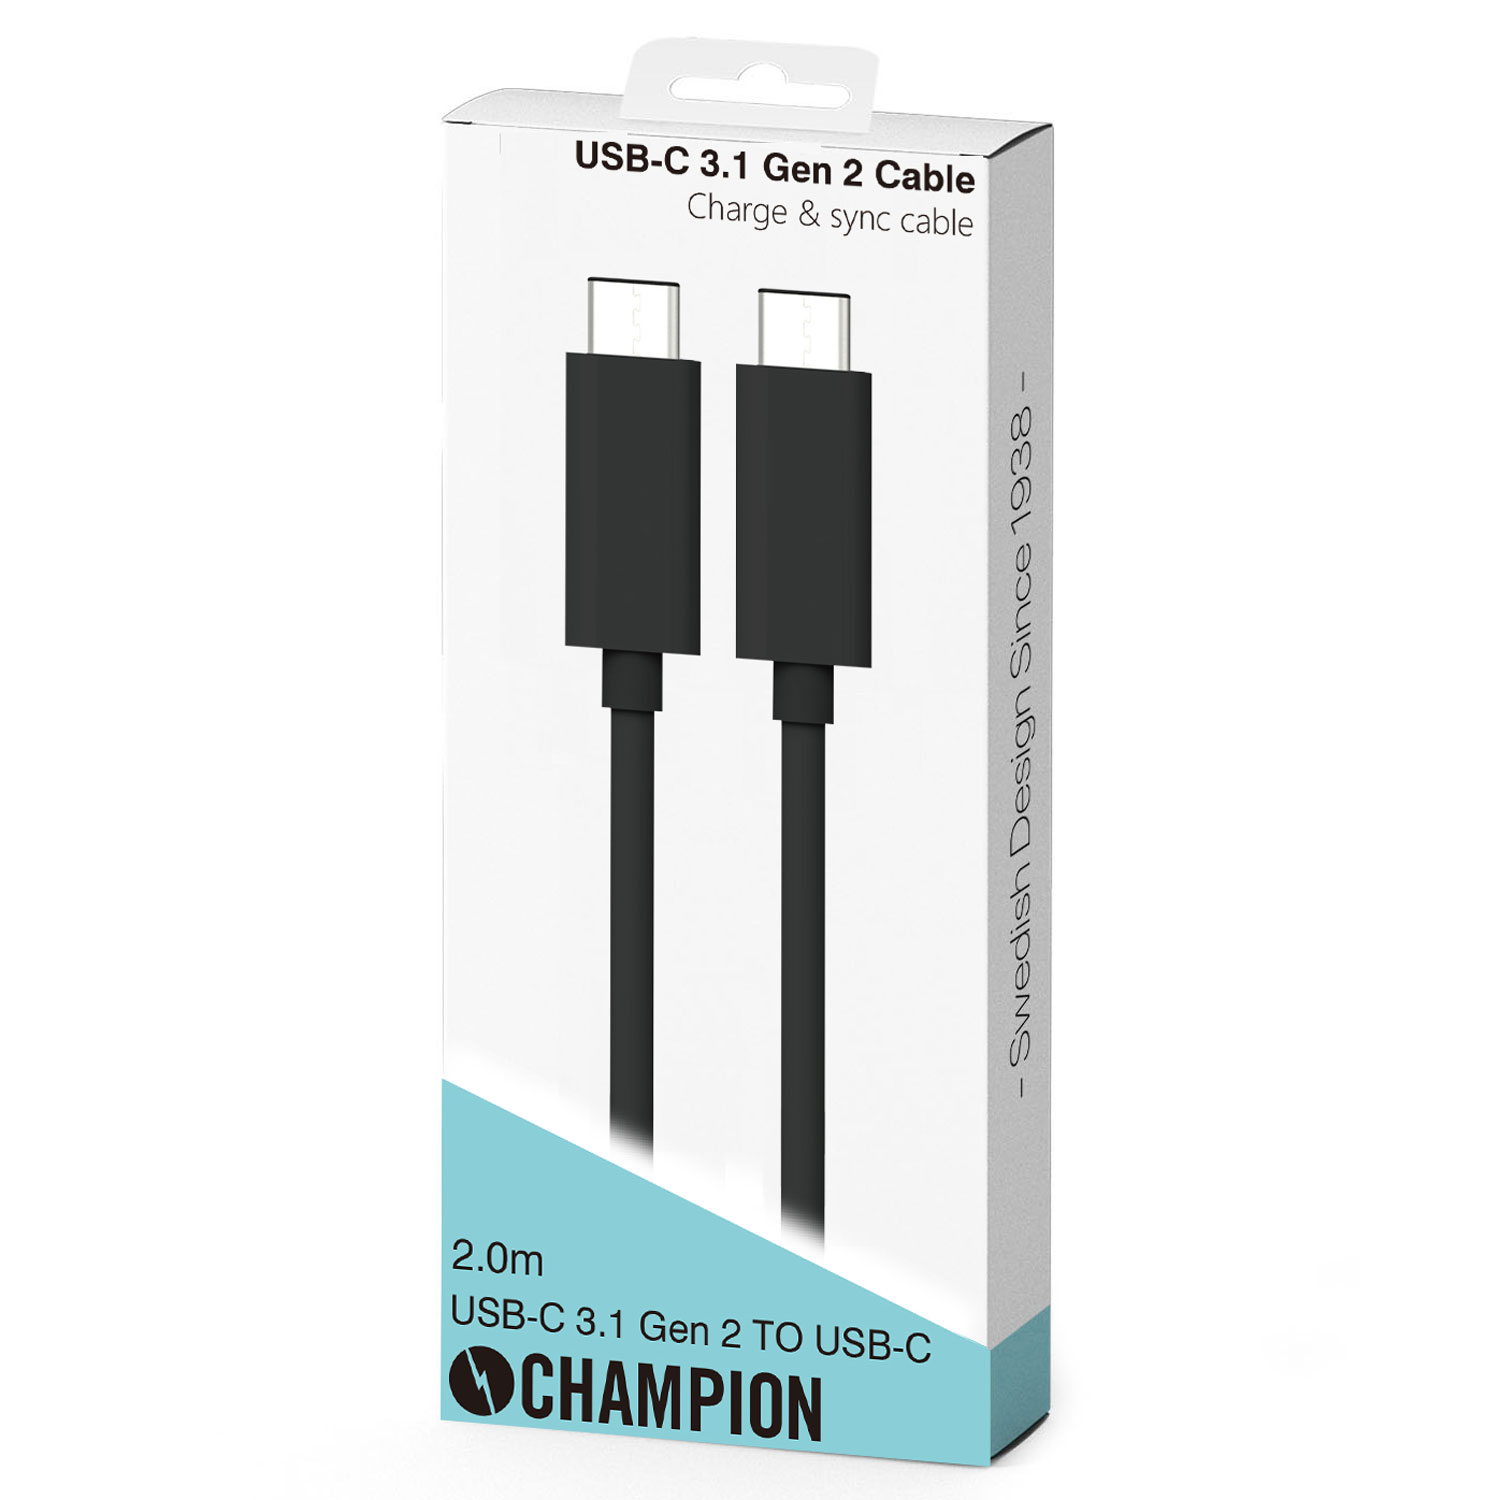 CHAMPION USB C Gen2 - USB-C m 3.1 2 Kabale C